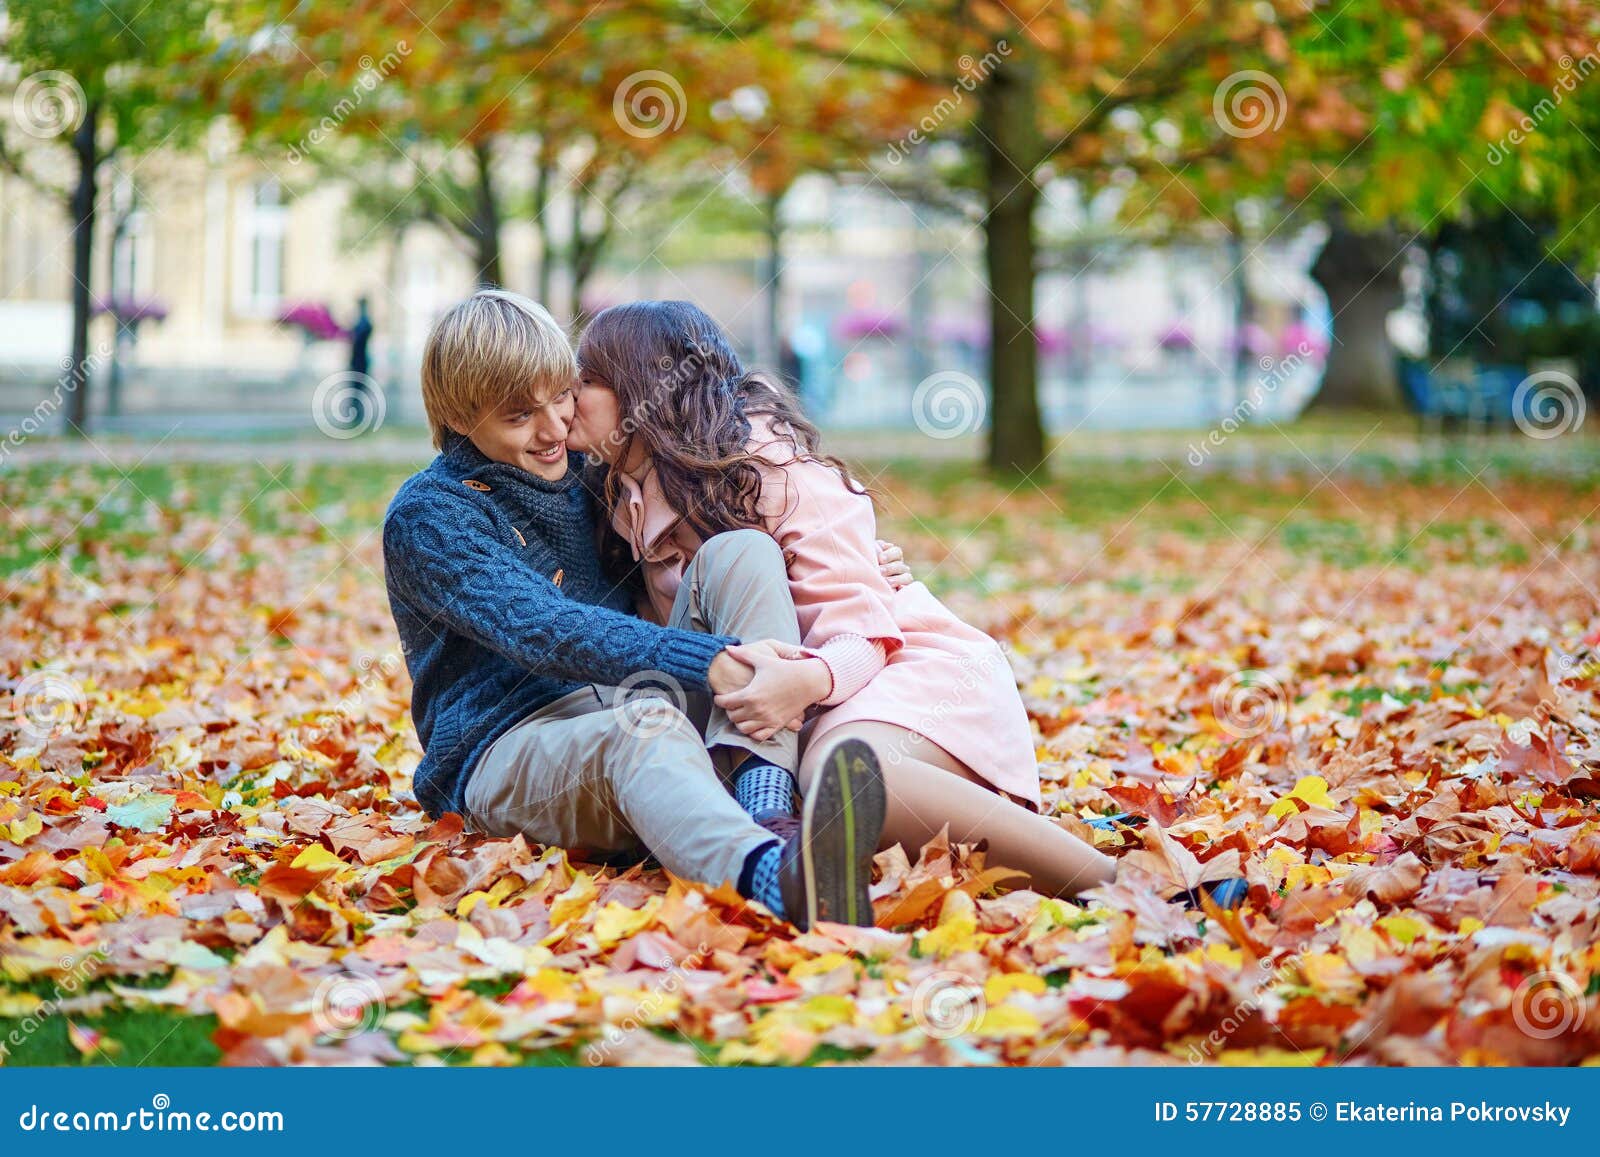 fall dating